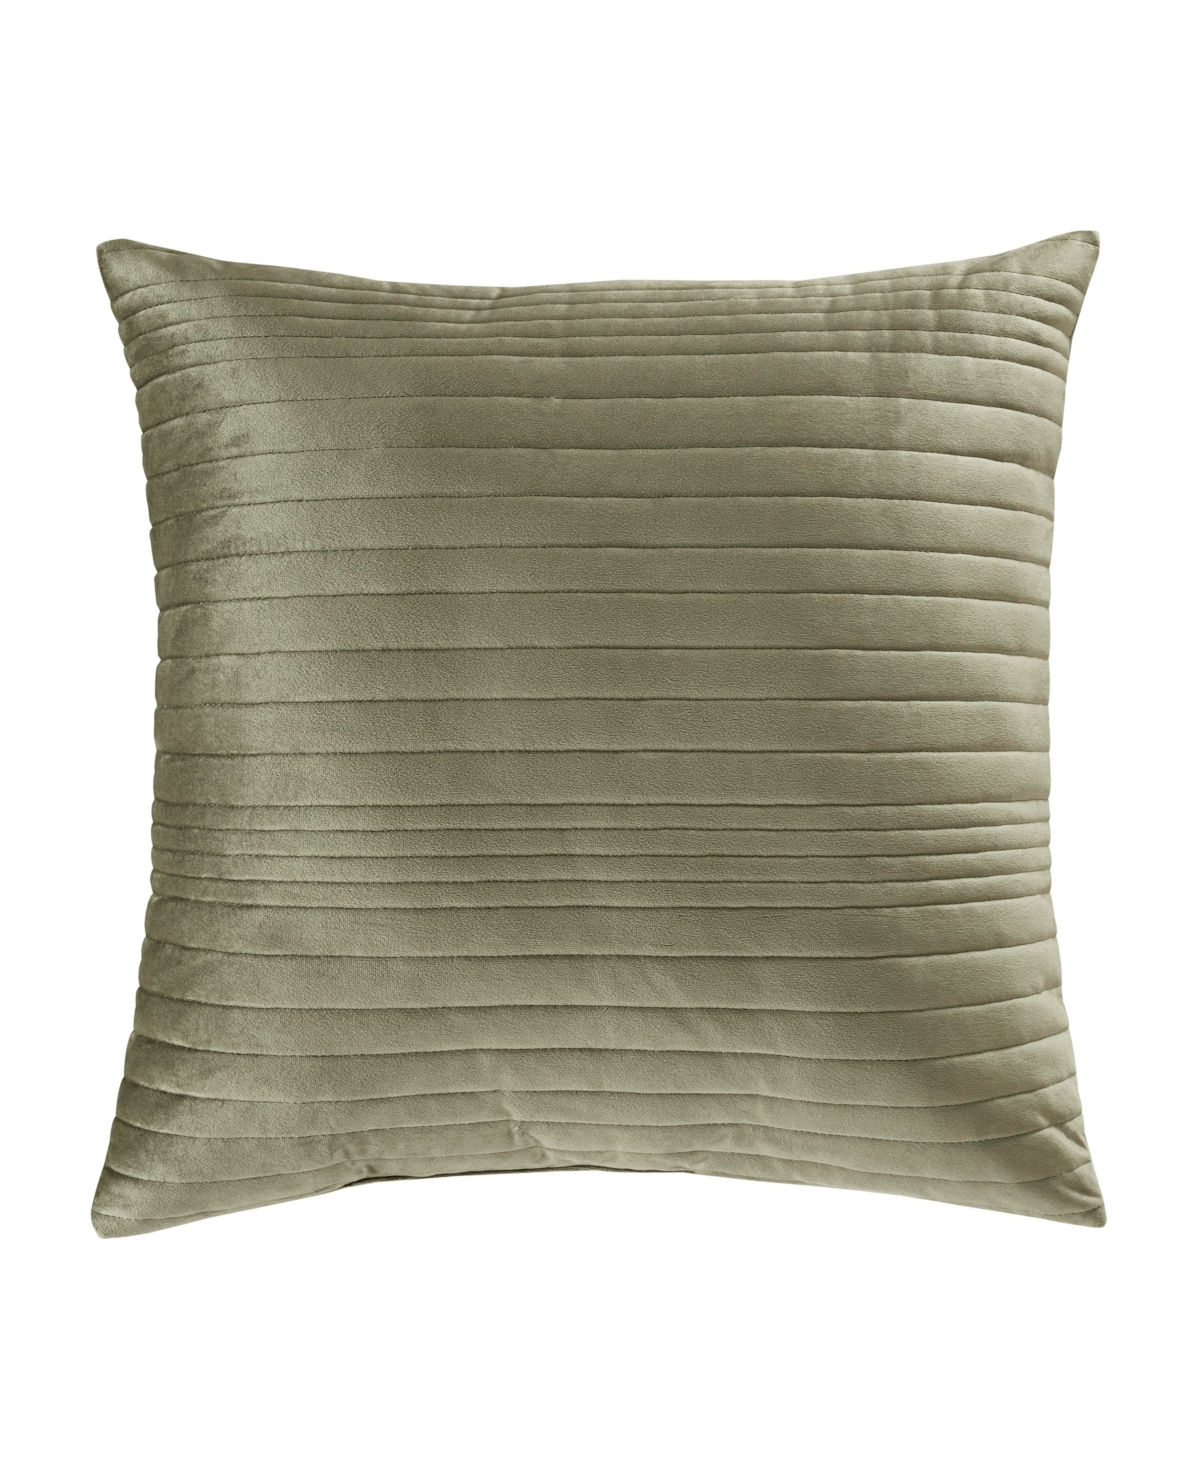 Oscar Oliver Mercer Decorative Pillow, 20" X 20" In Olive